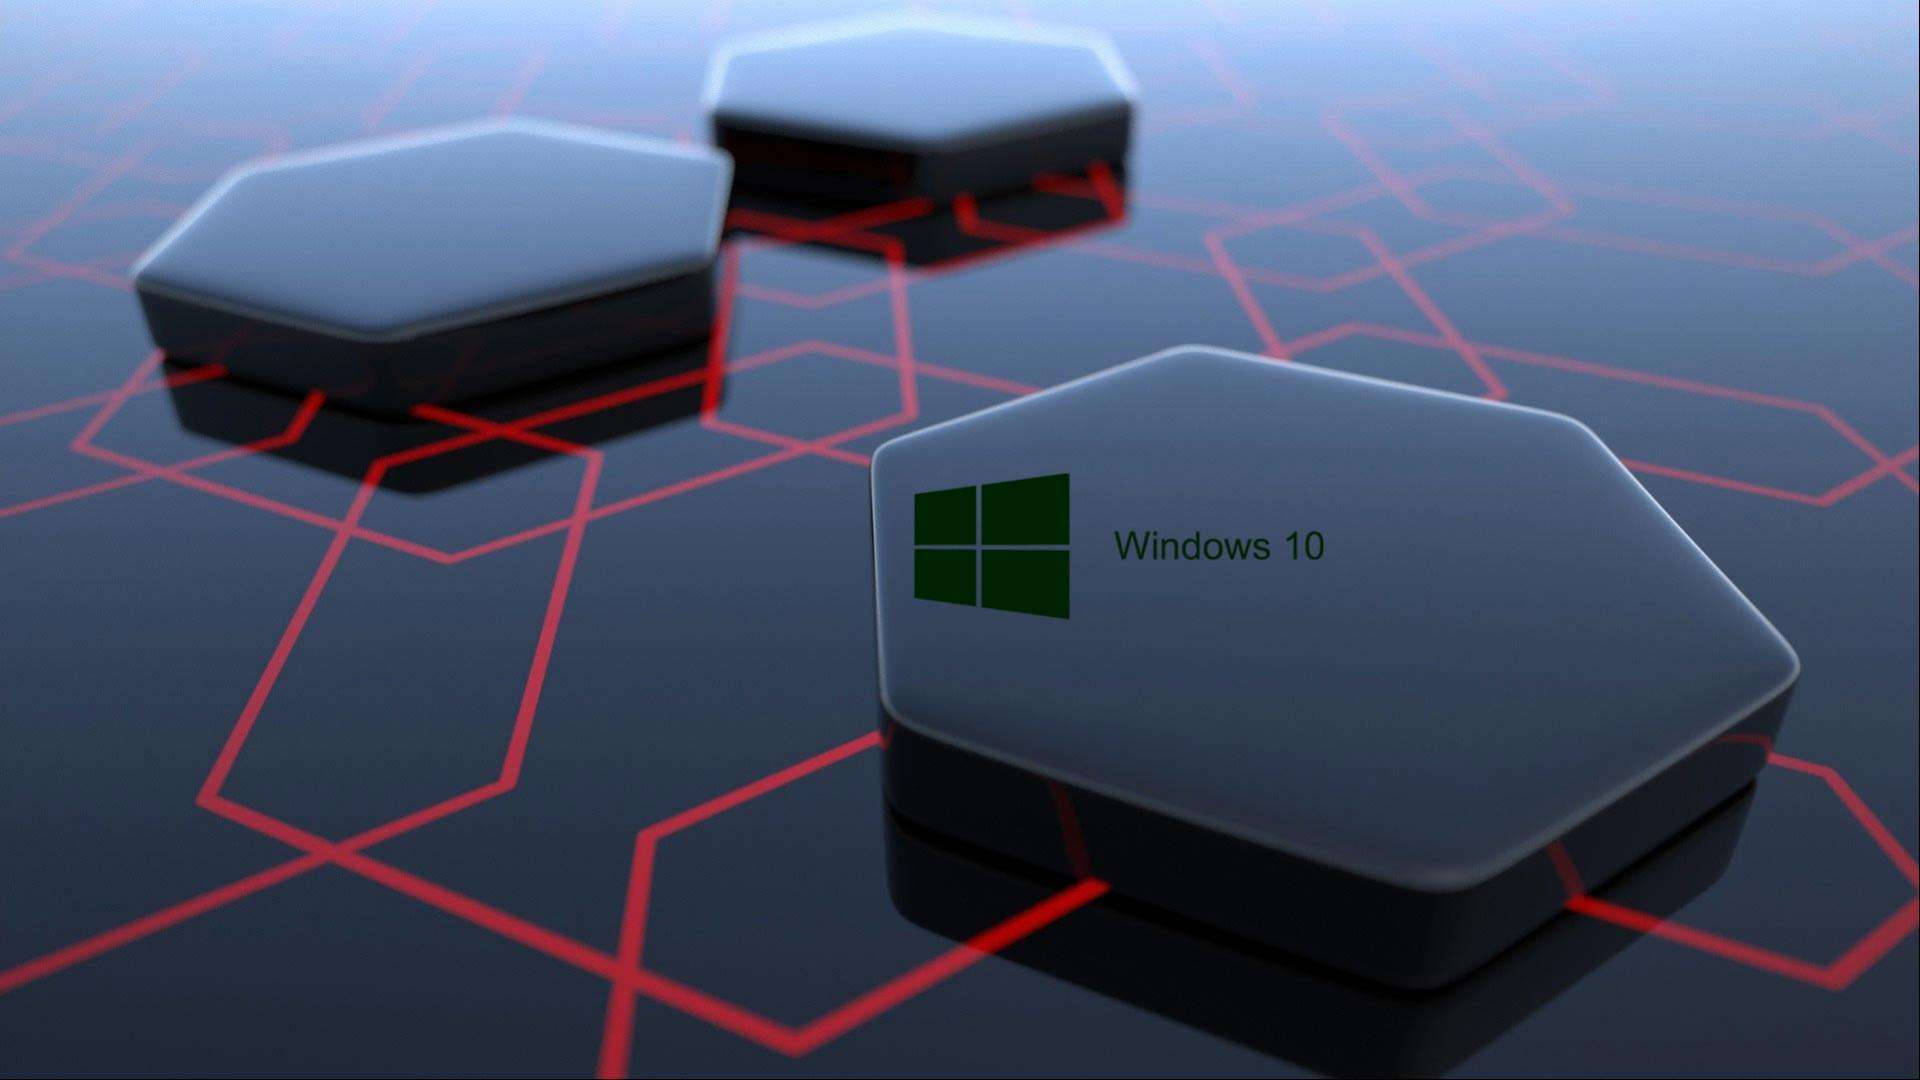 Windows 10 Hd Floating Hexagons Wallpaper